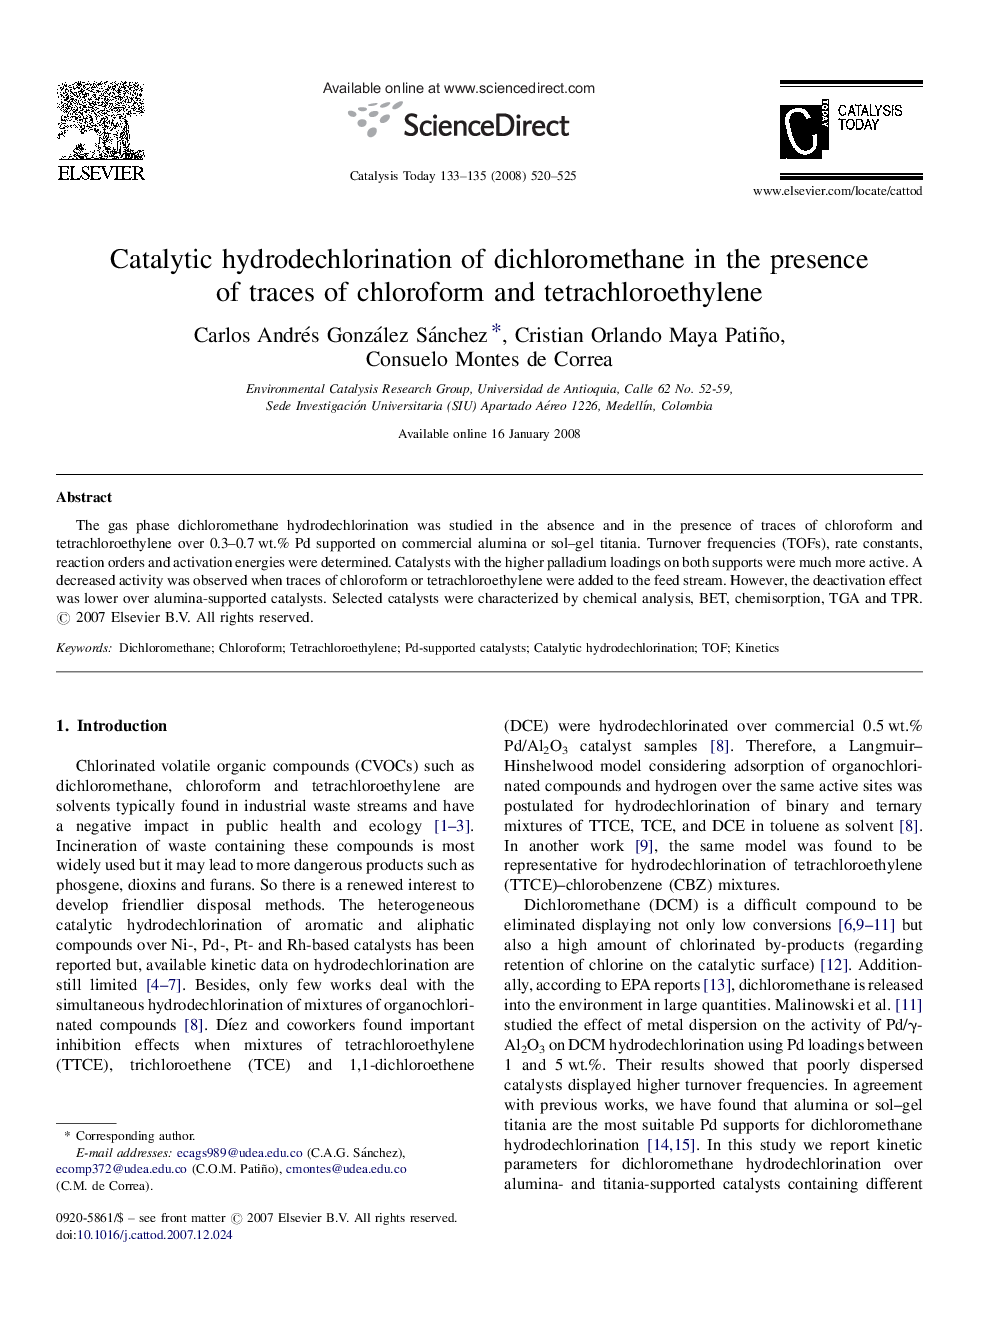 Catalytic hydrodechlorination of dichloromethane in the presence of traces of chloroform and tetrachloroethylene